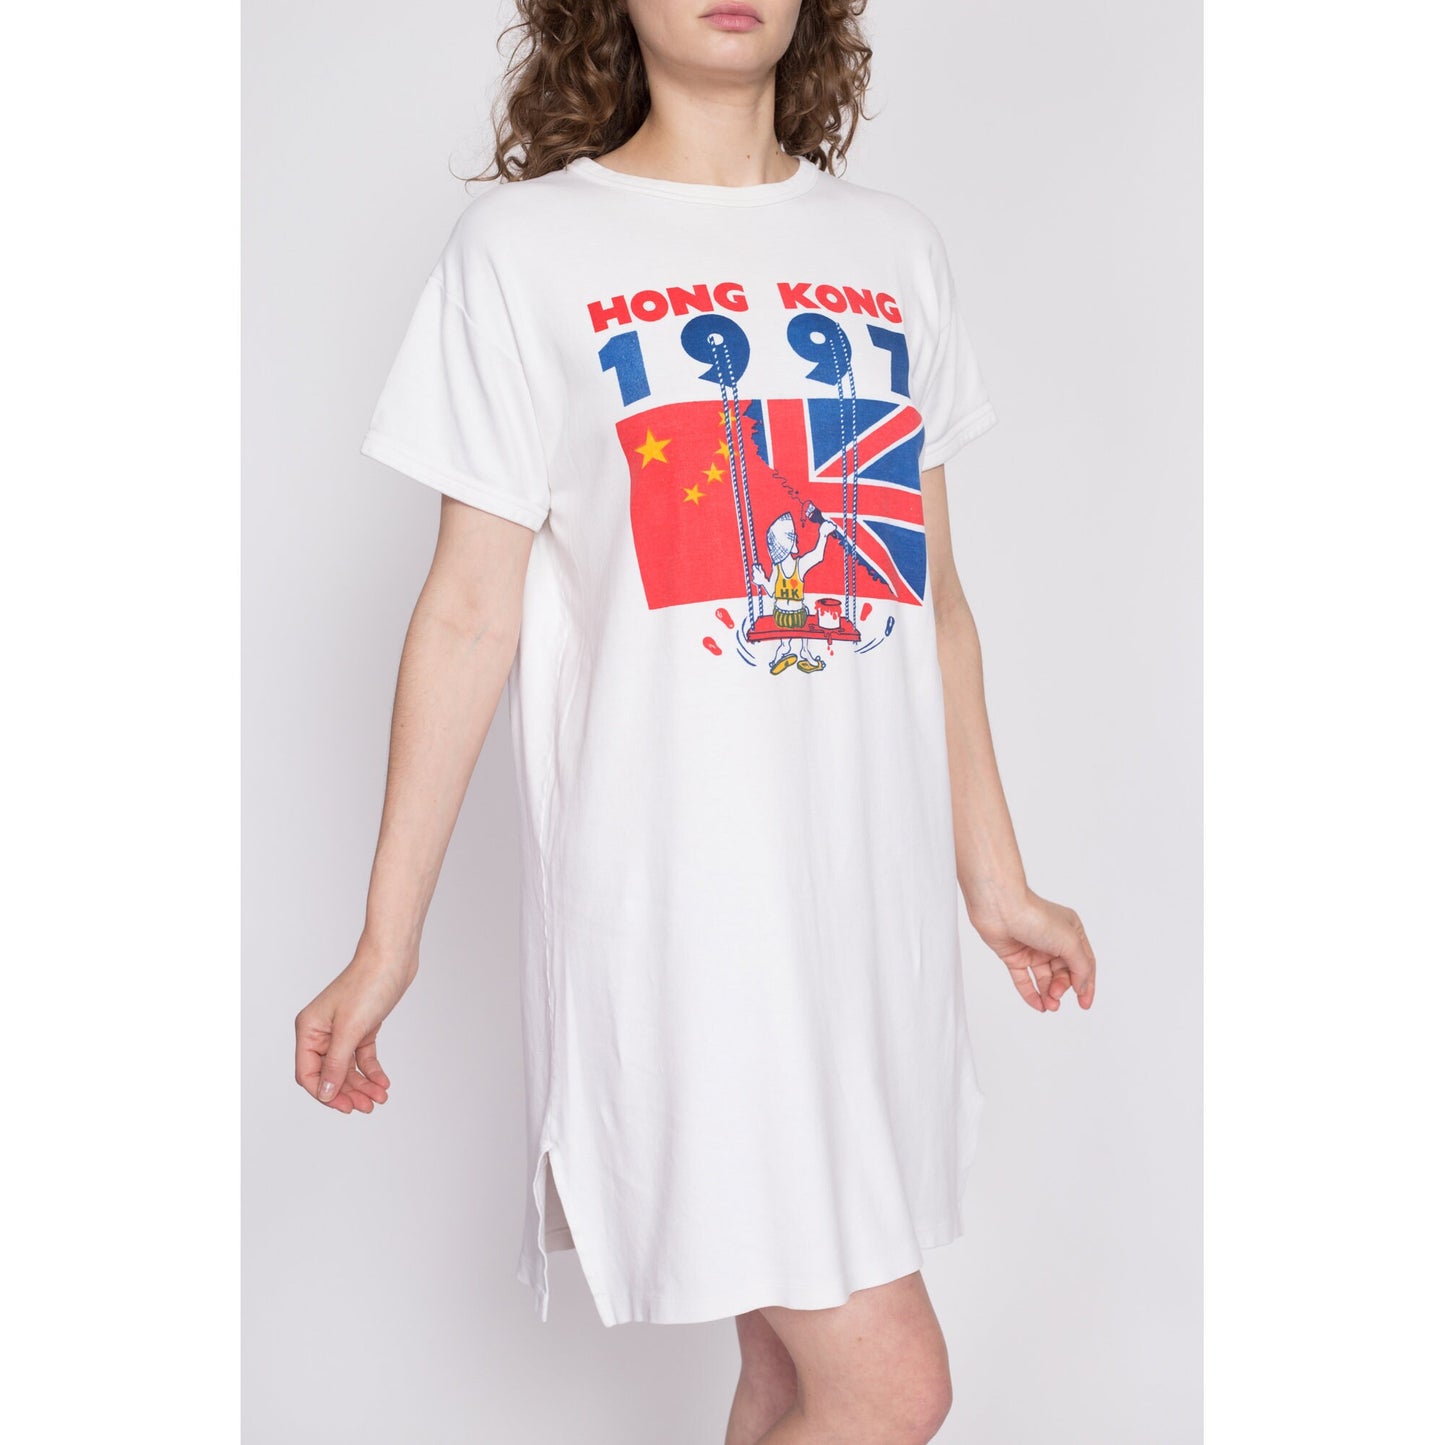 1997 Hong Kong Handover T Shirt Dress - One Size | Vintage 90s China Return Political Graphic Tee Sleep Shirt